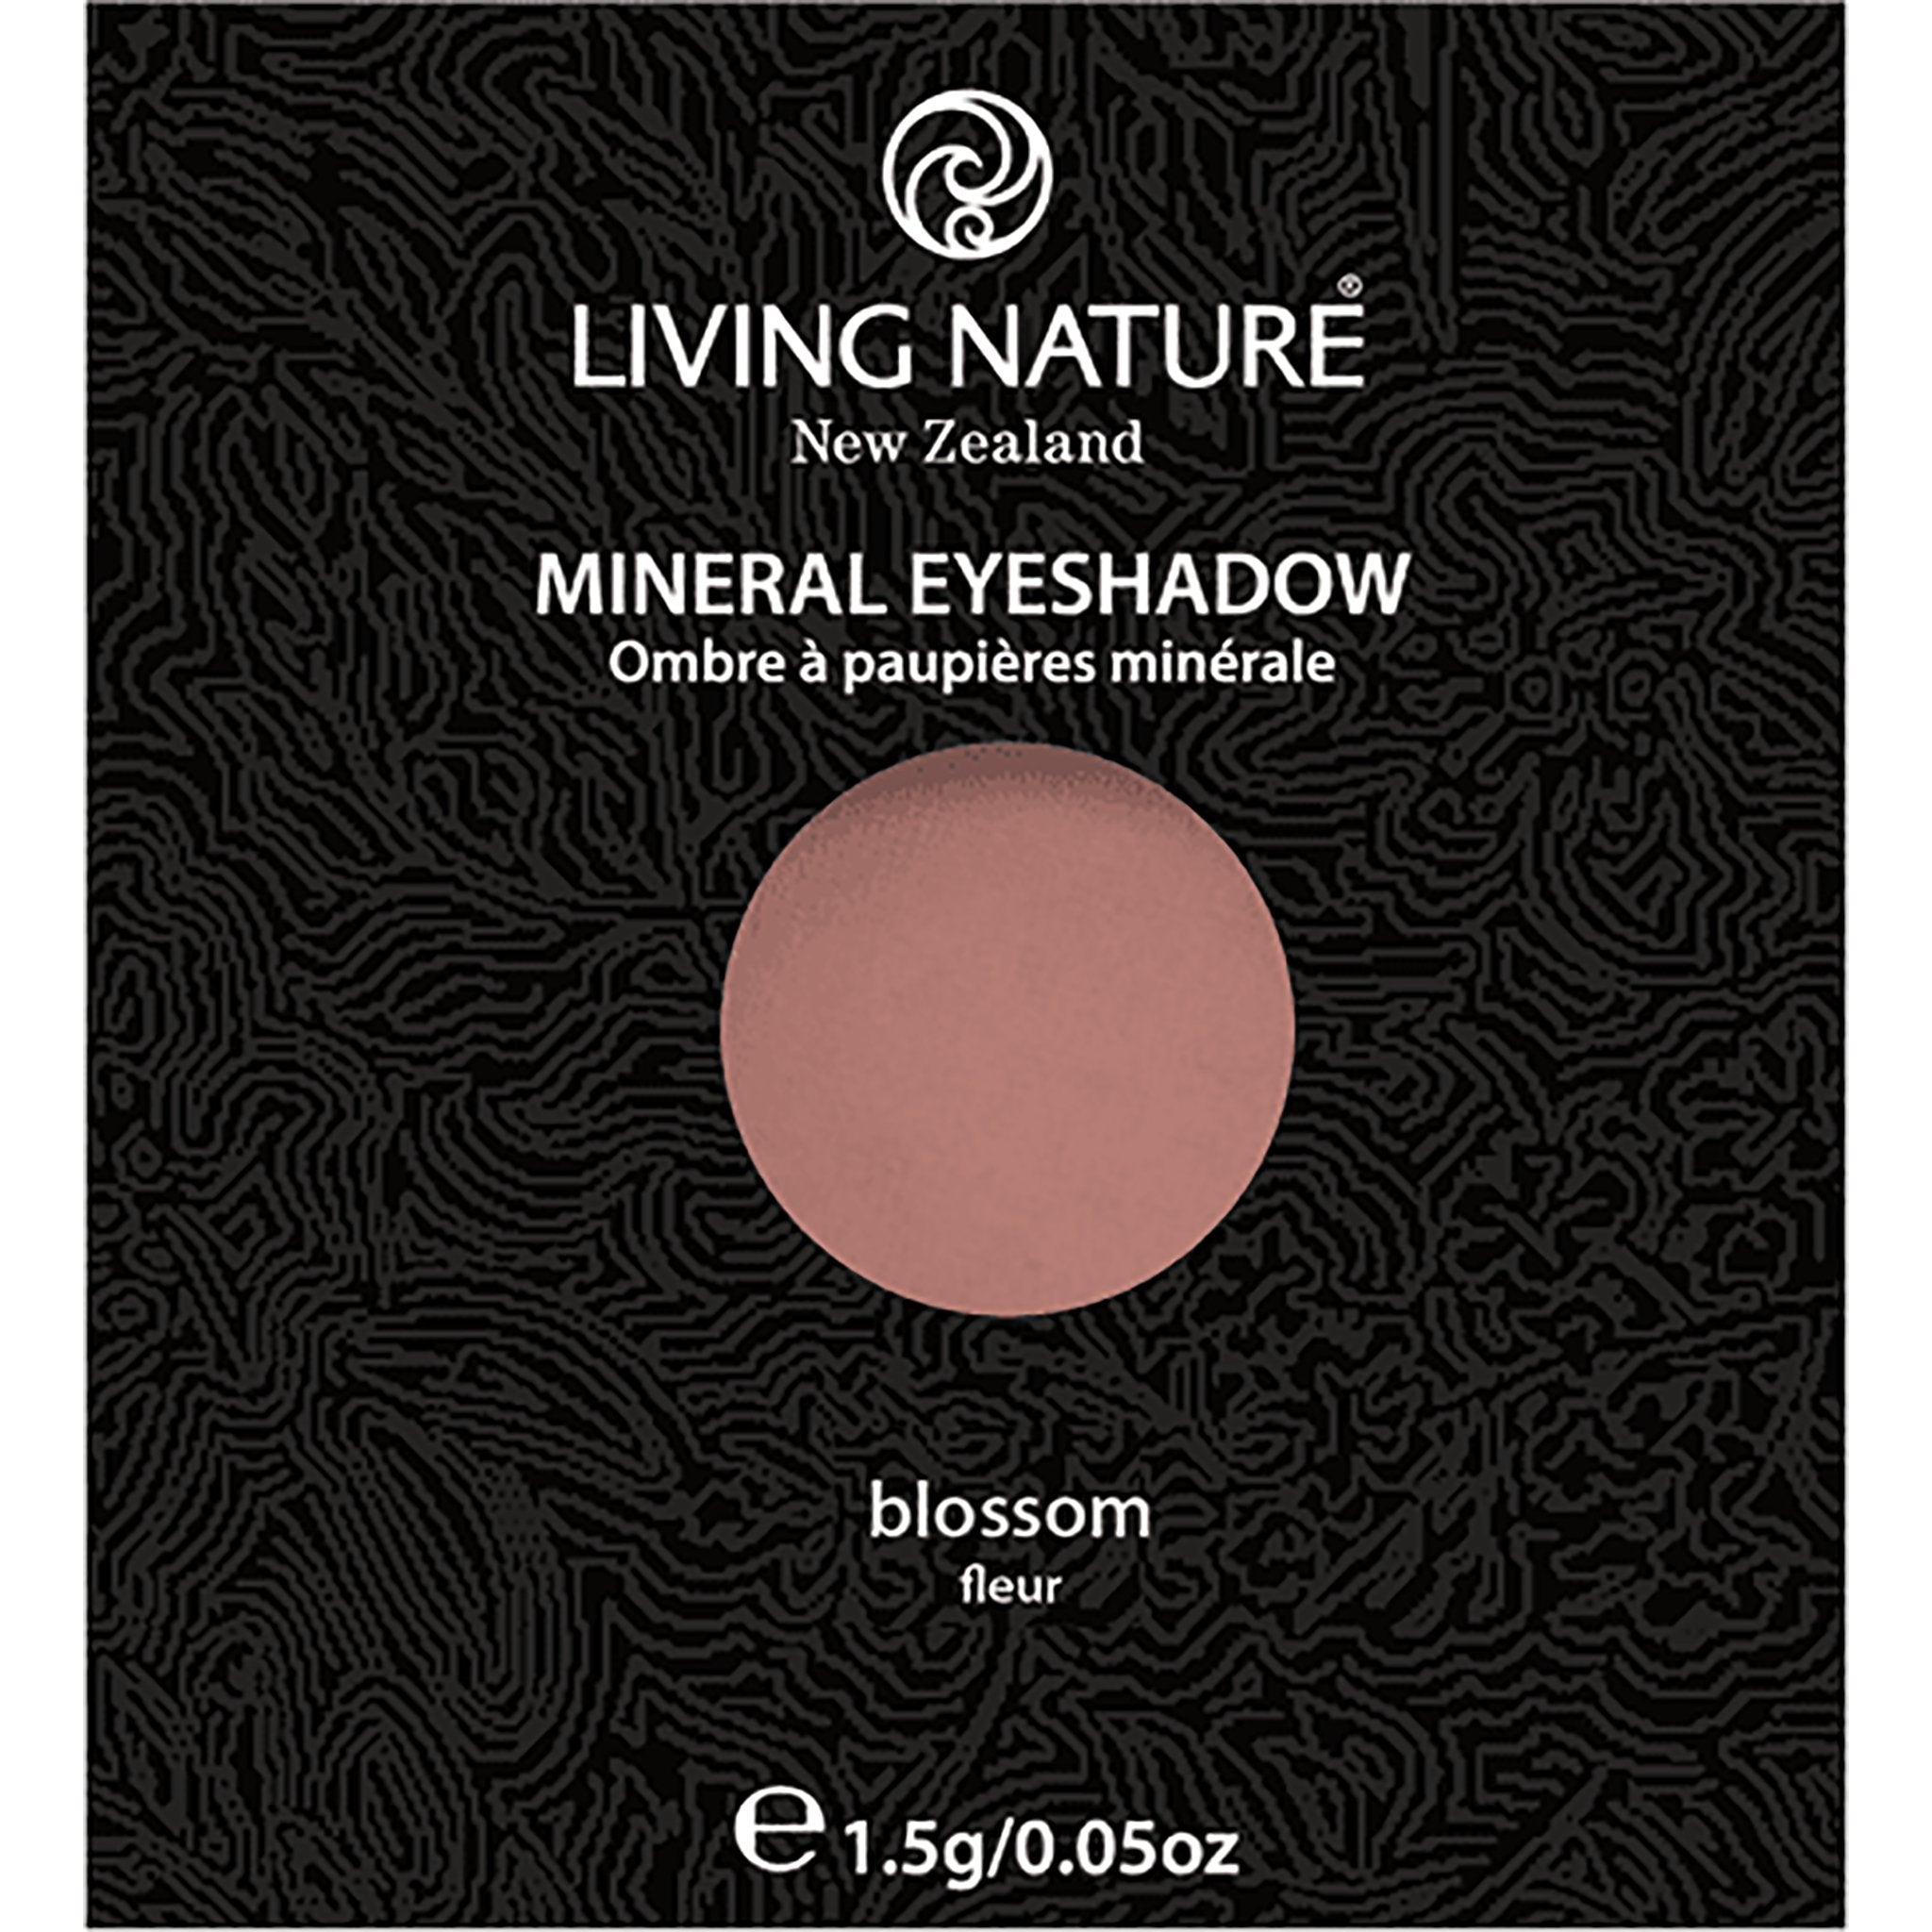 Mineral Eye Shadow - mypure.co.uk